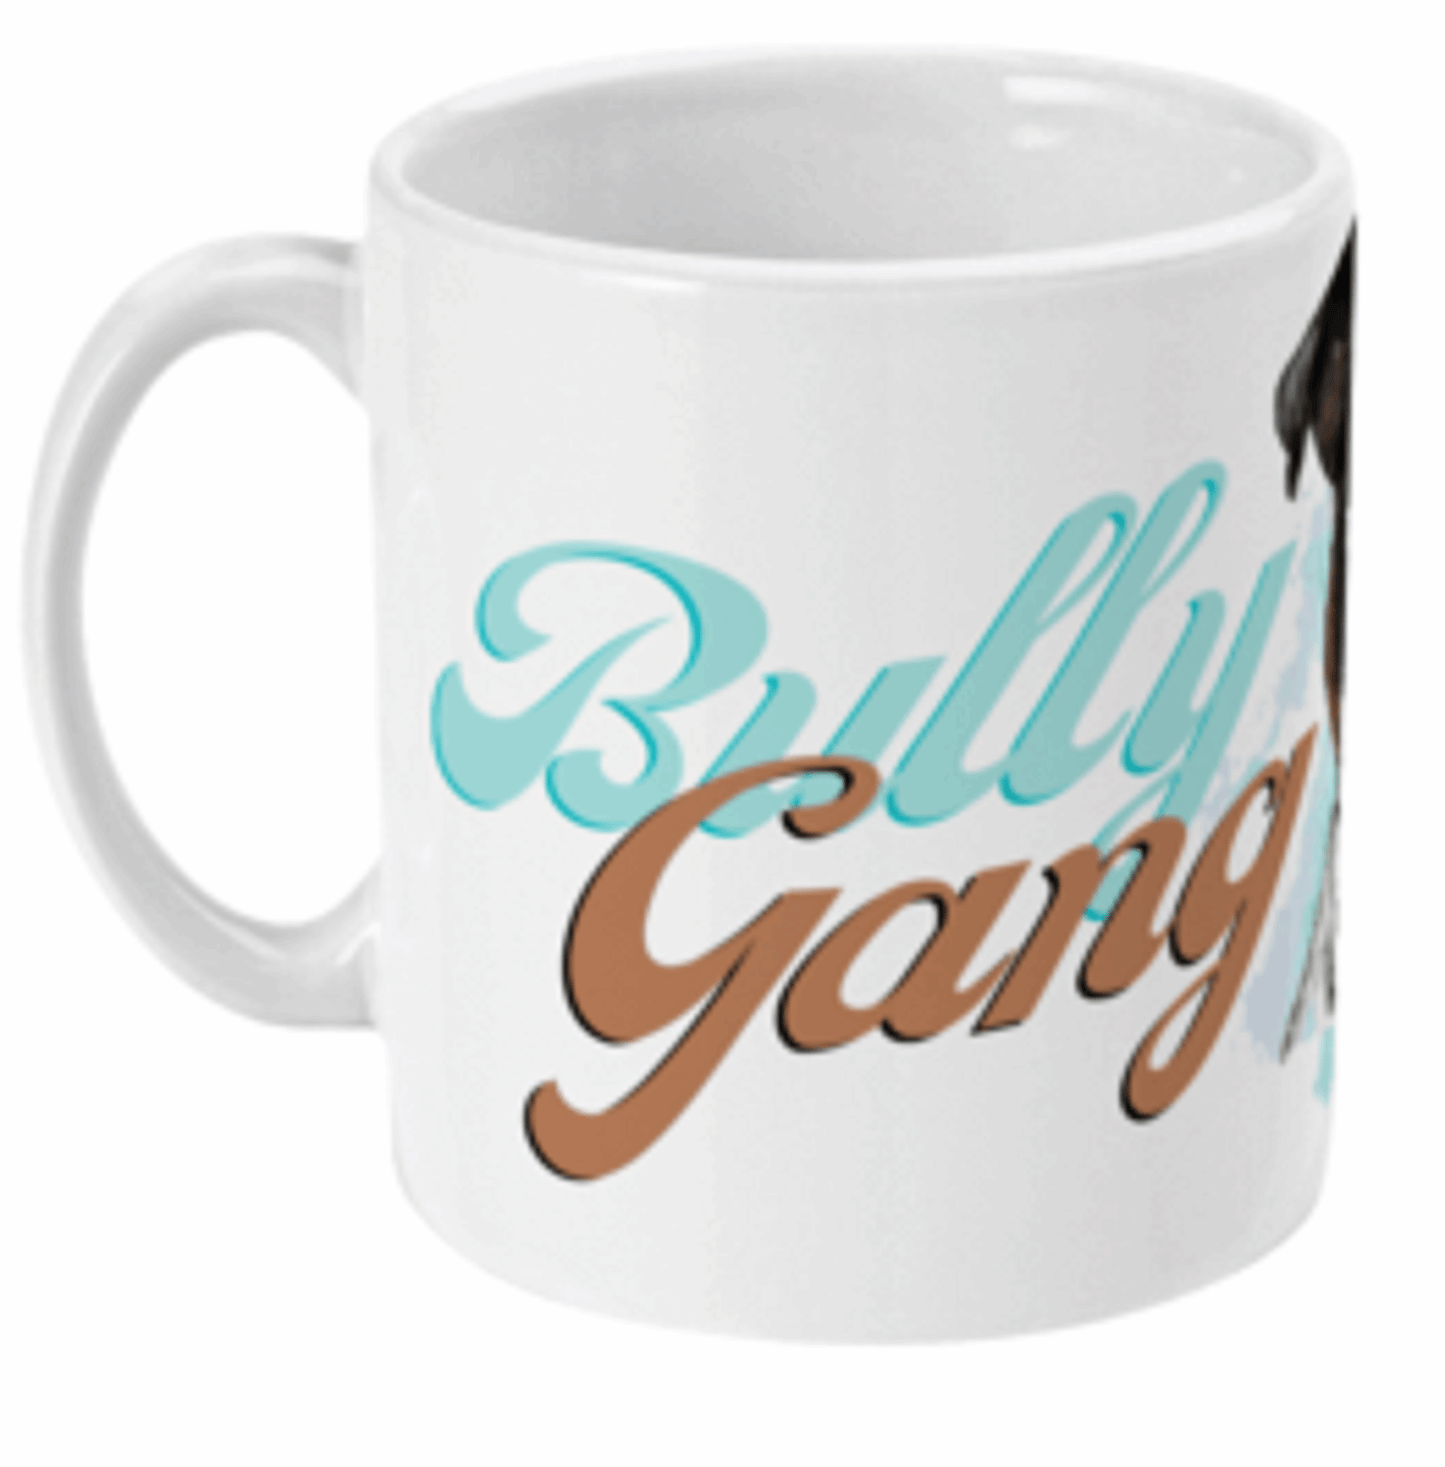  Bully Gang Dog Coffee/Tea Mug by Free Spirit Accessories sold by Free Spirit Accessories